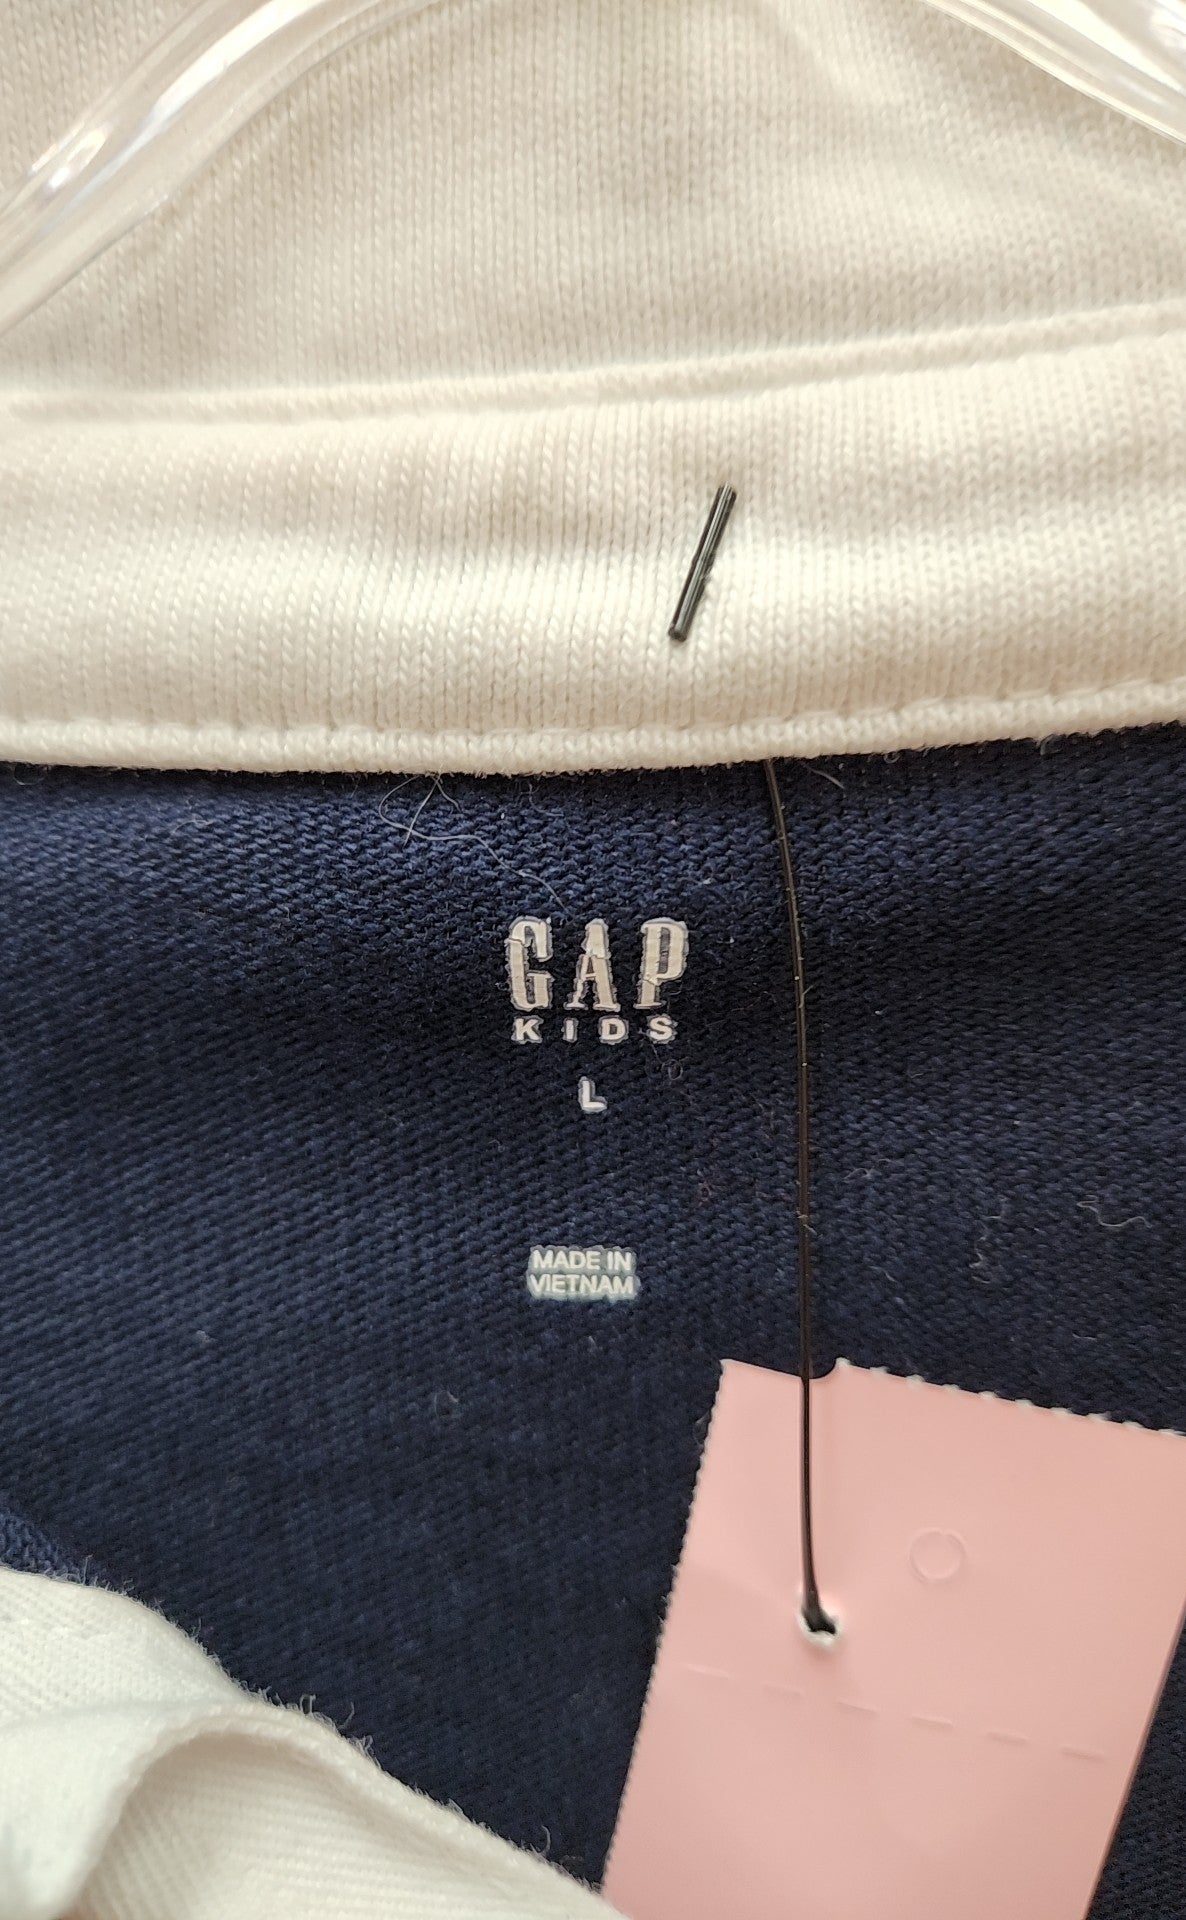 Gap Boy's Size 14 Navy Shirt